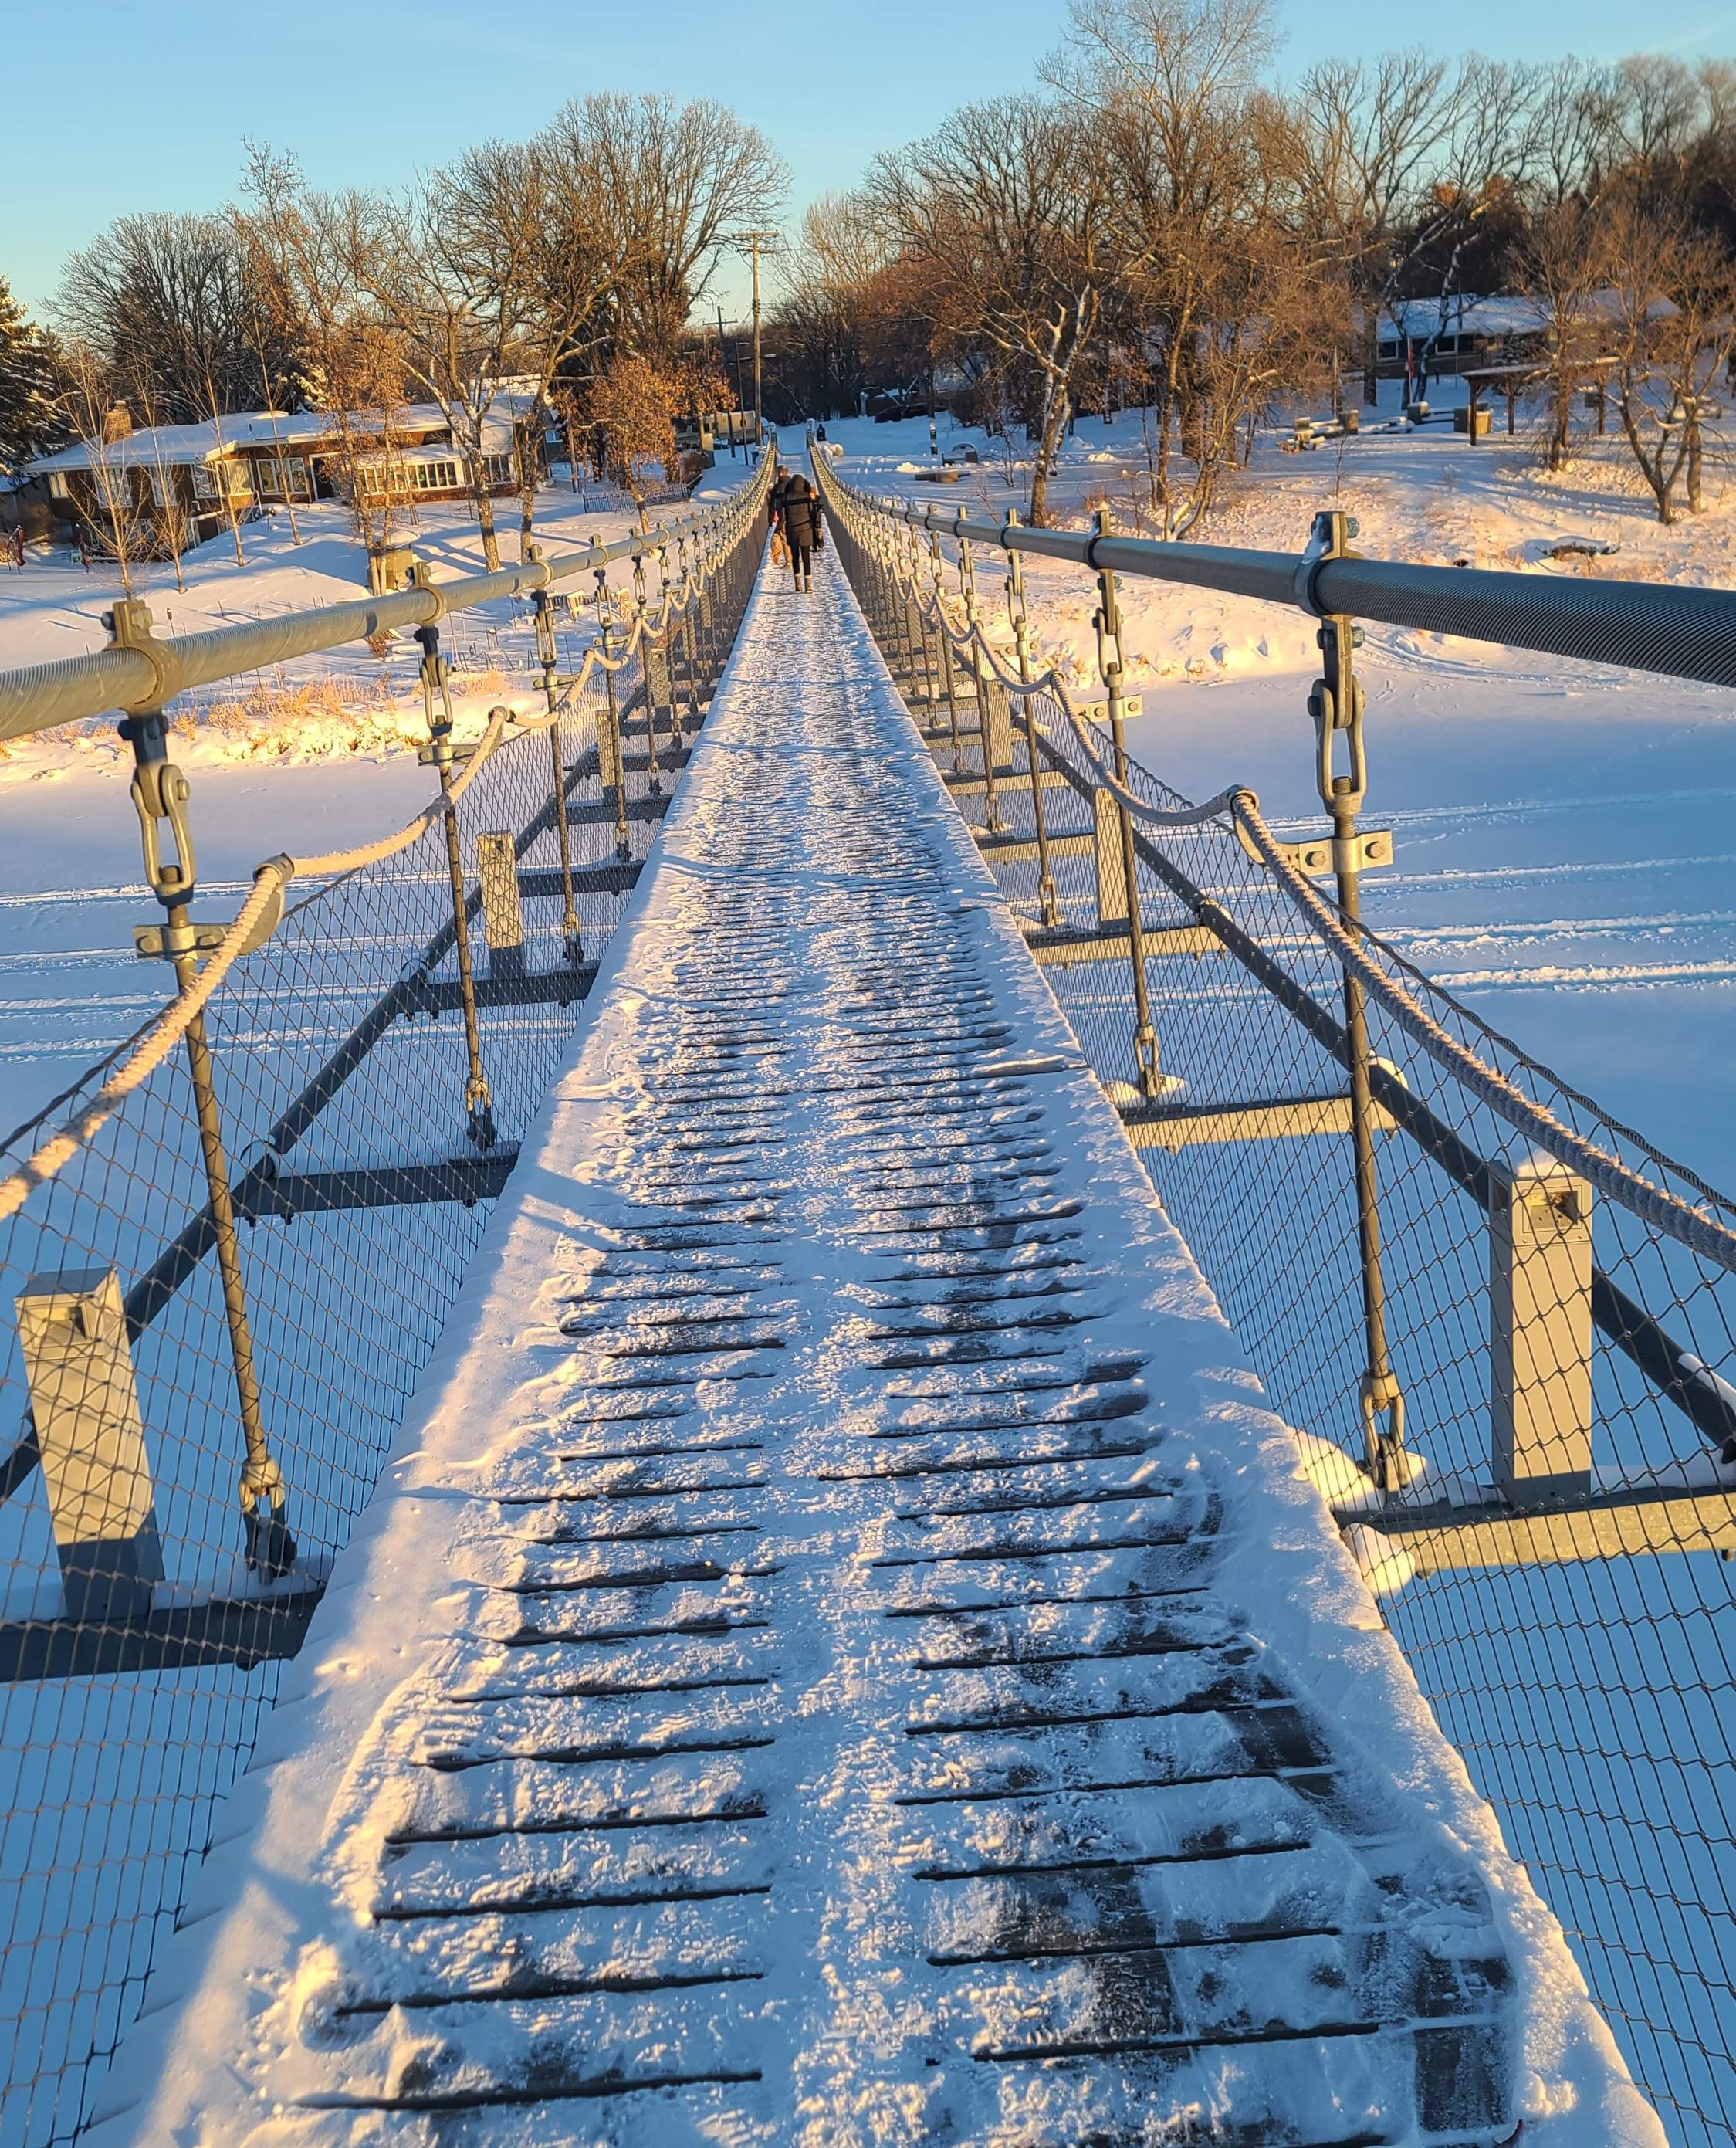 The Swinging Bridge in Winter